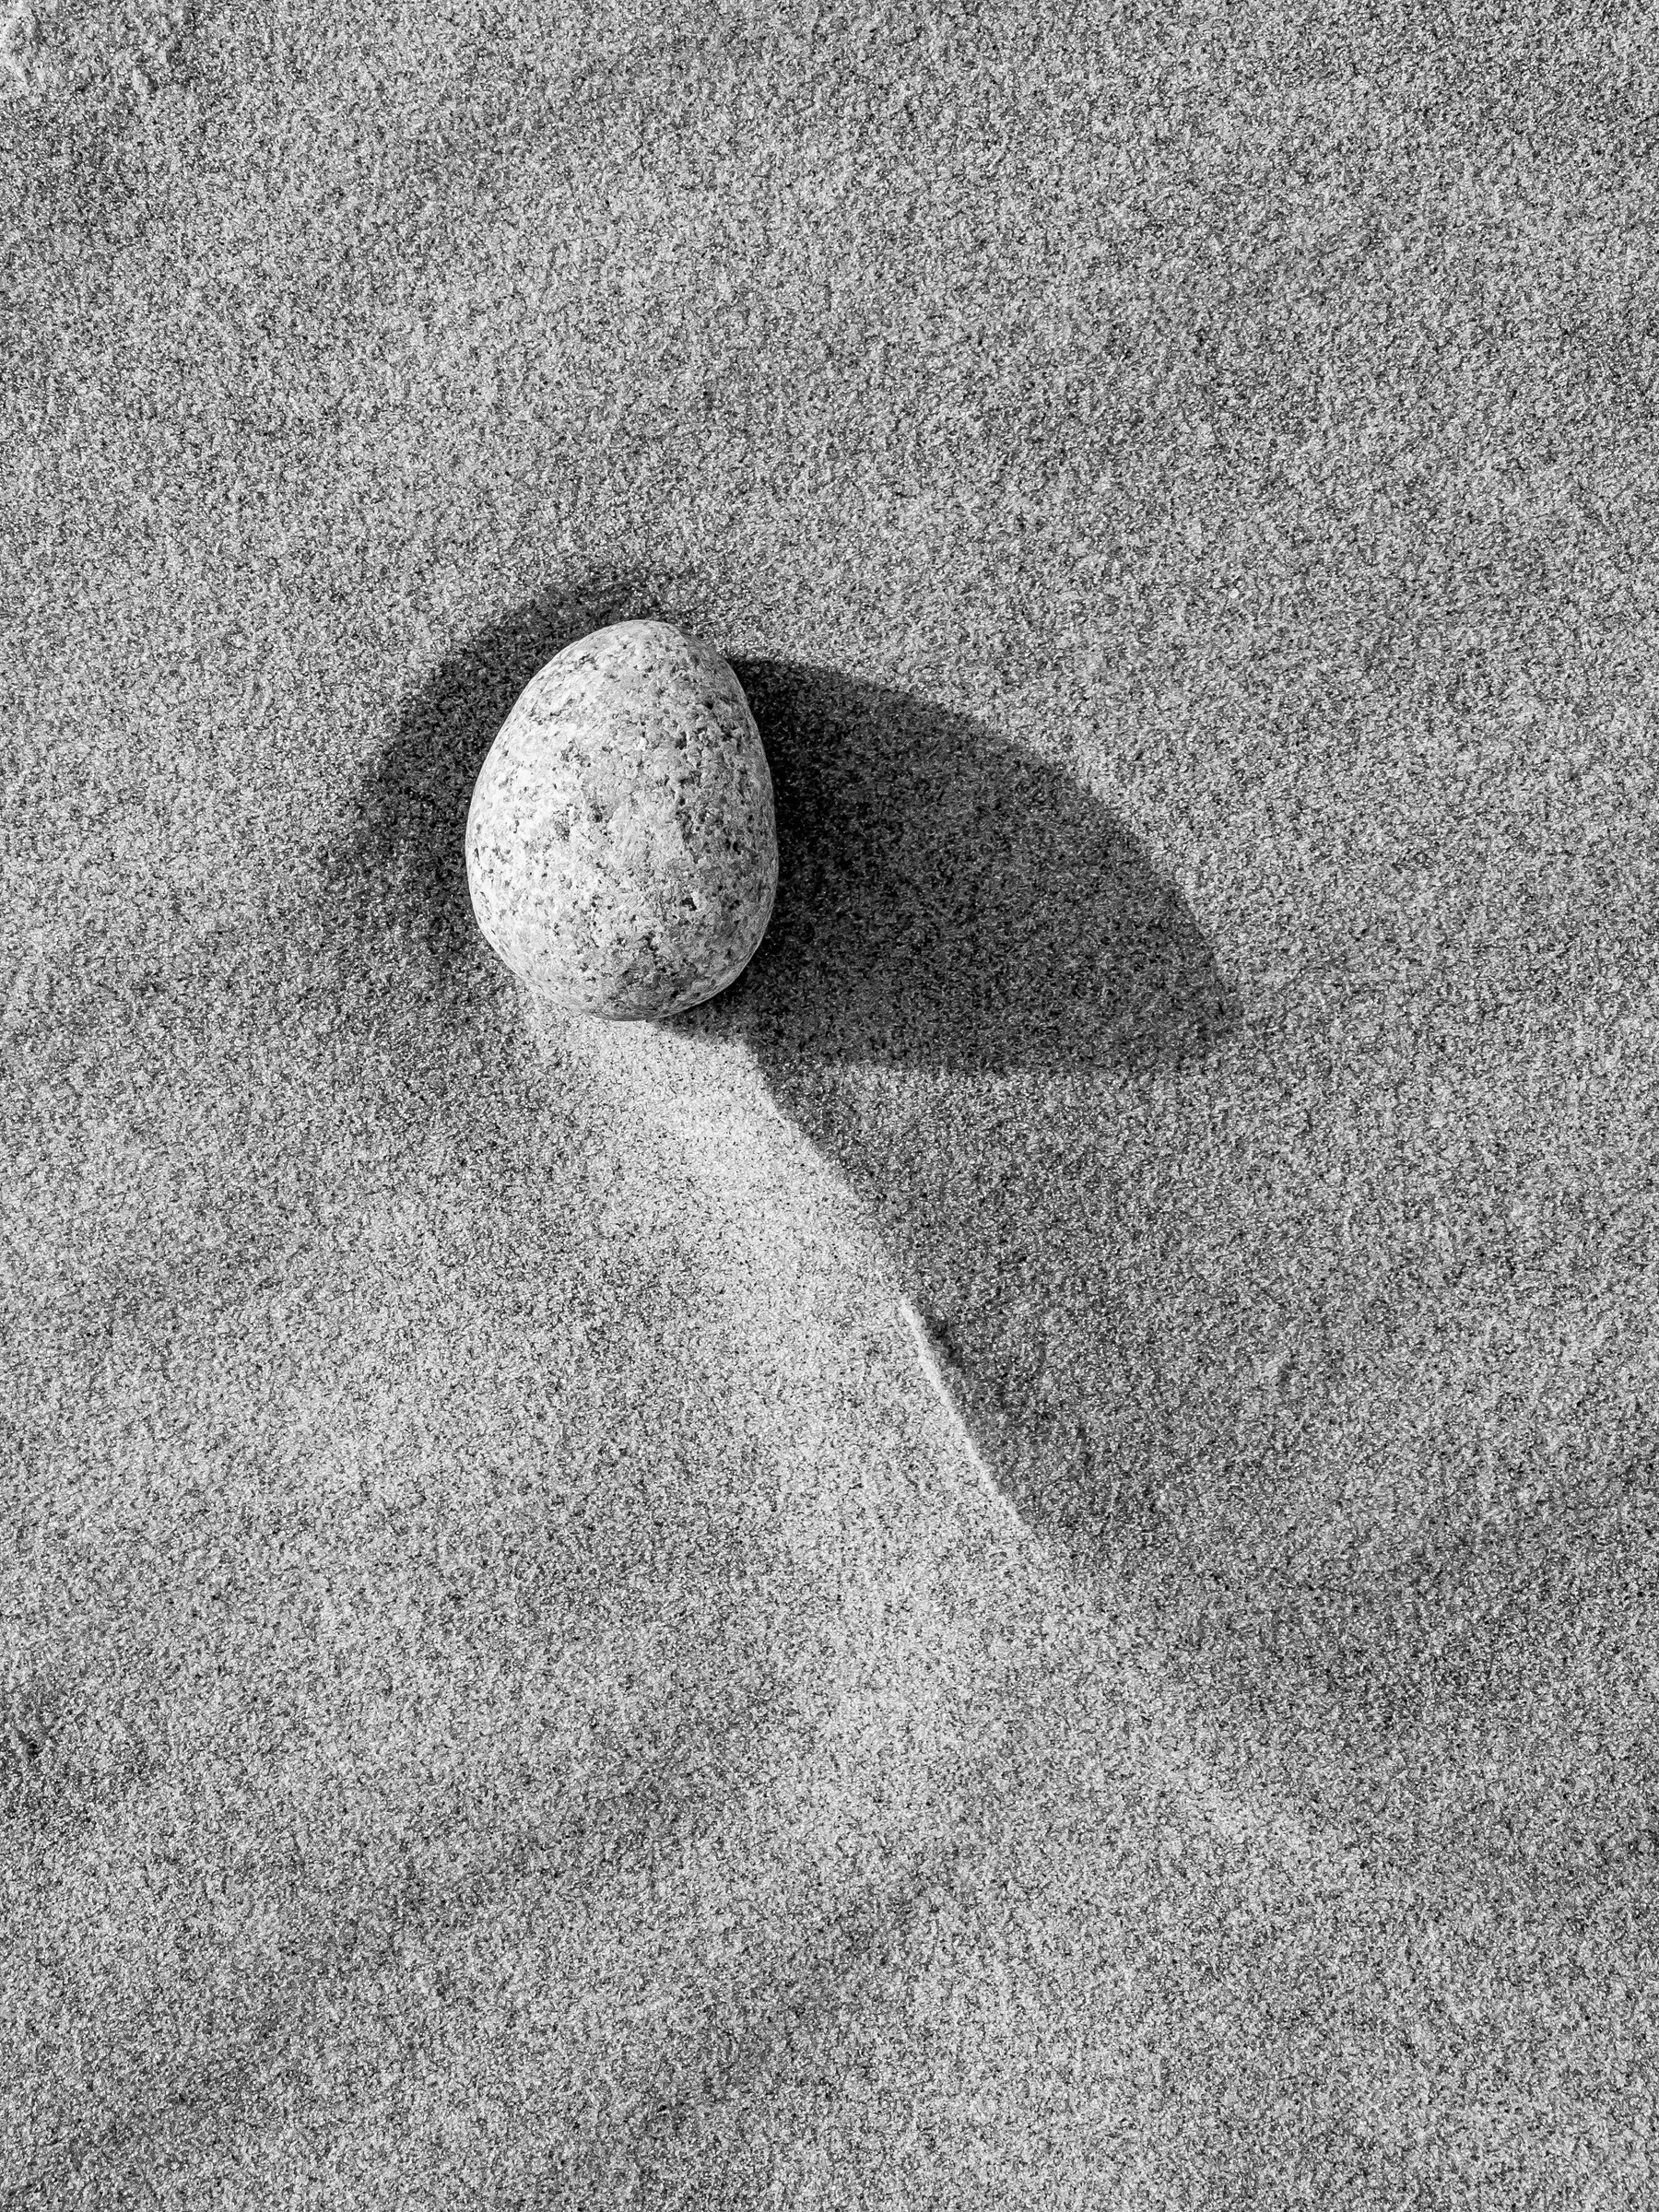 Stone and wind swept sand.